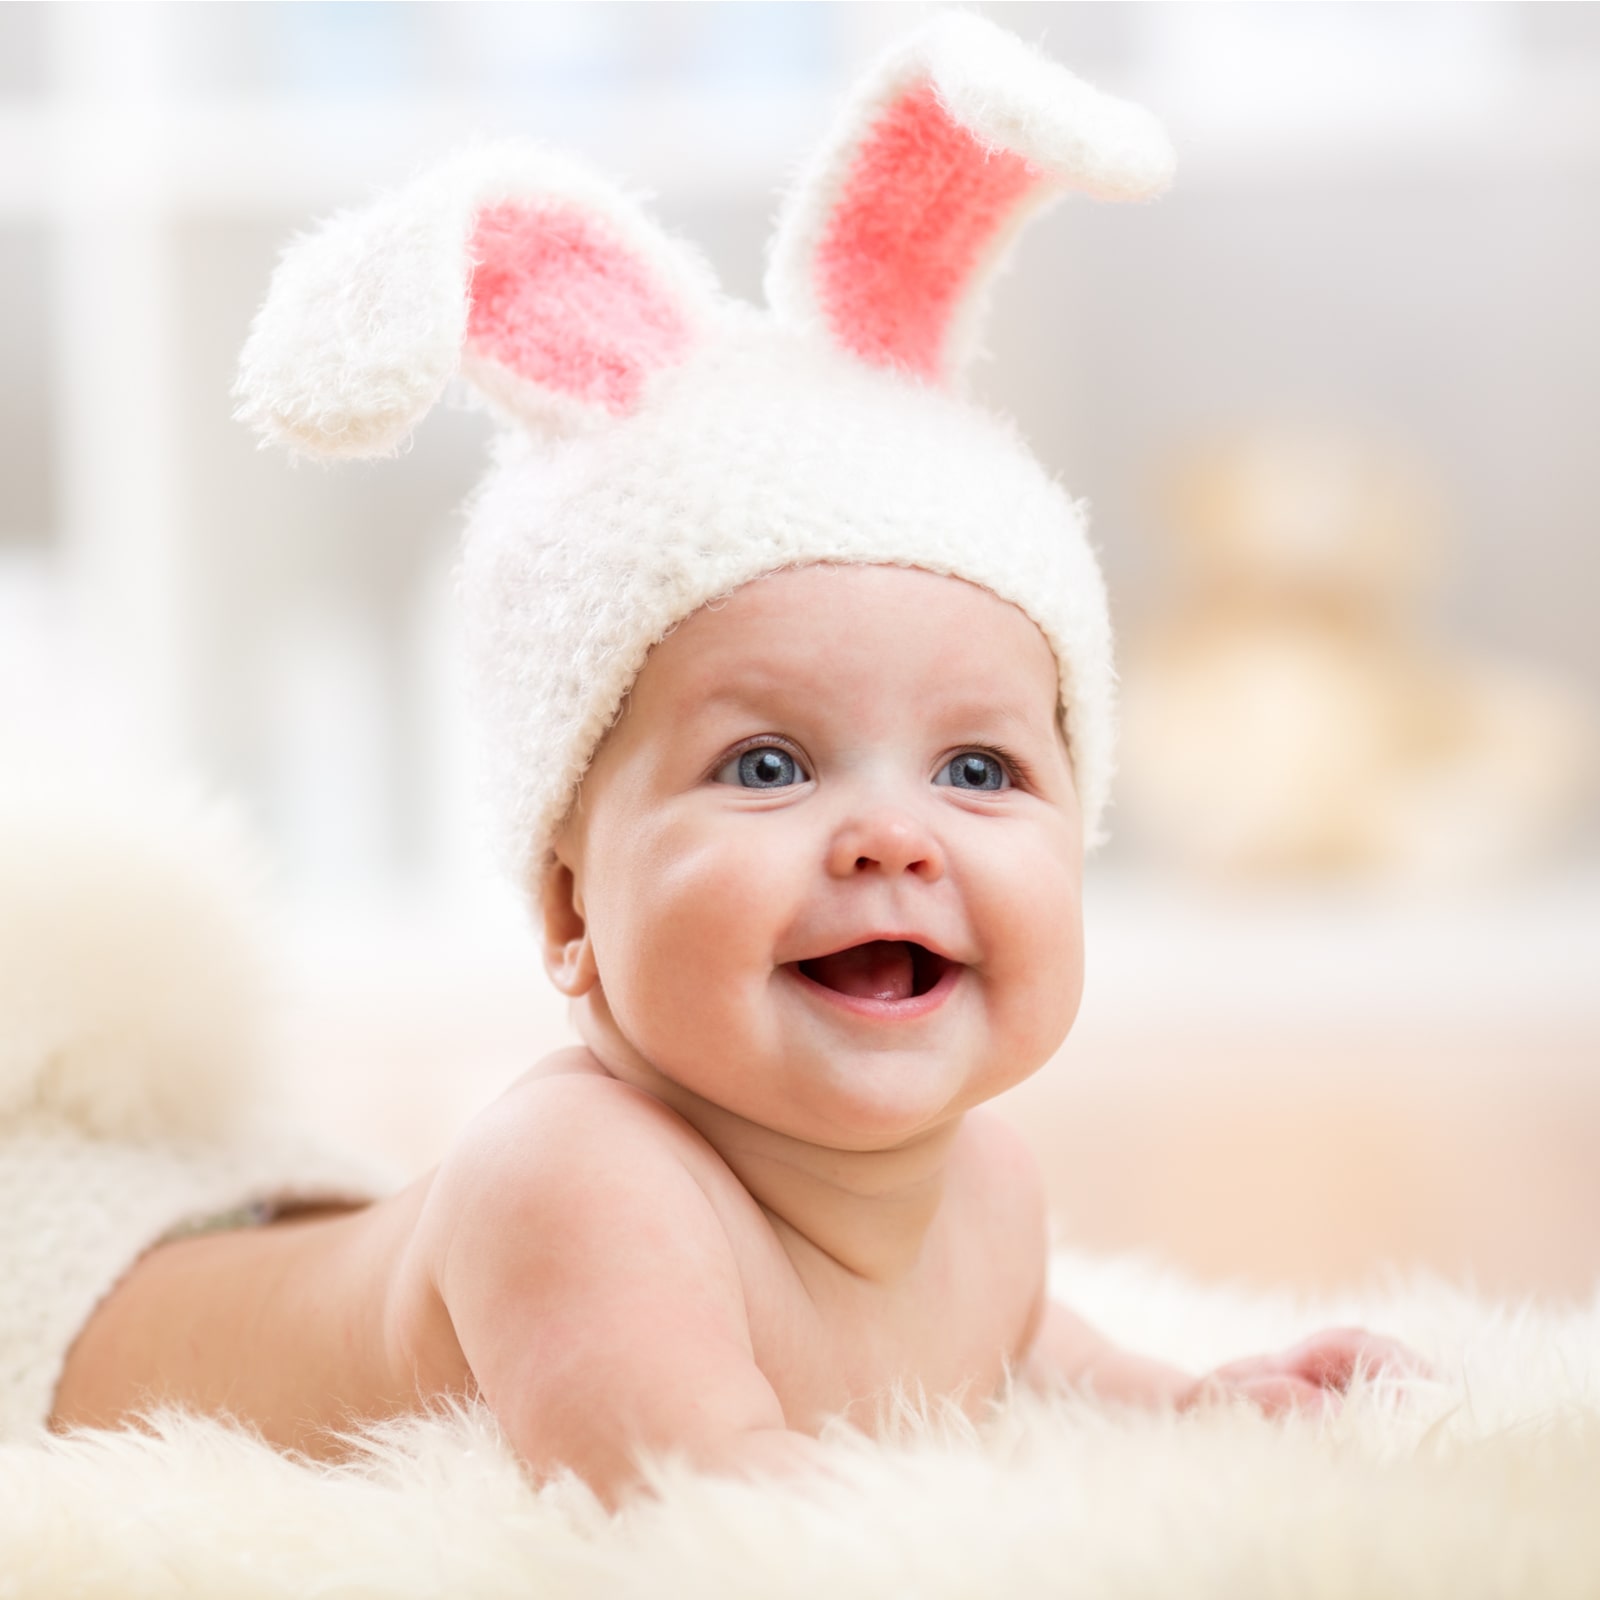 Smiling cute baby child in rabbit costum